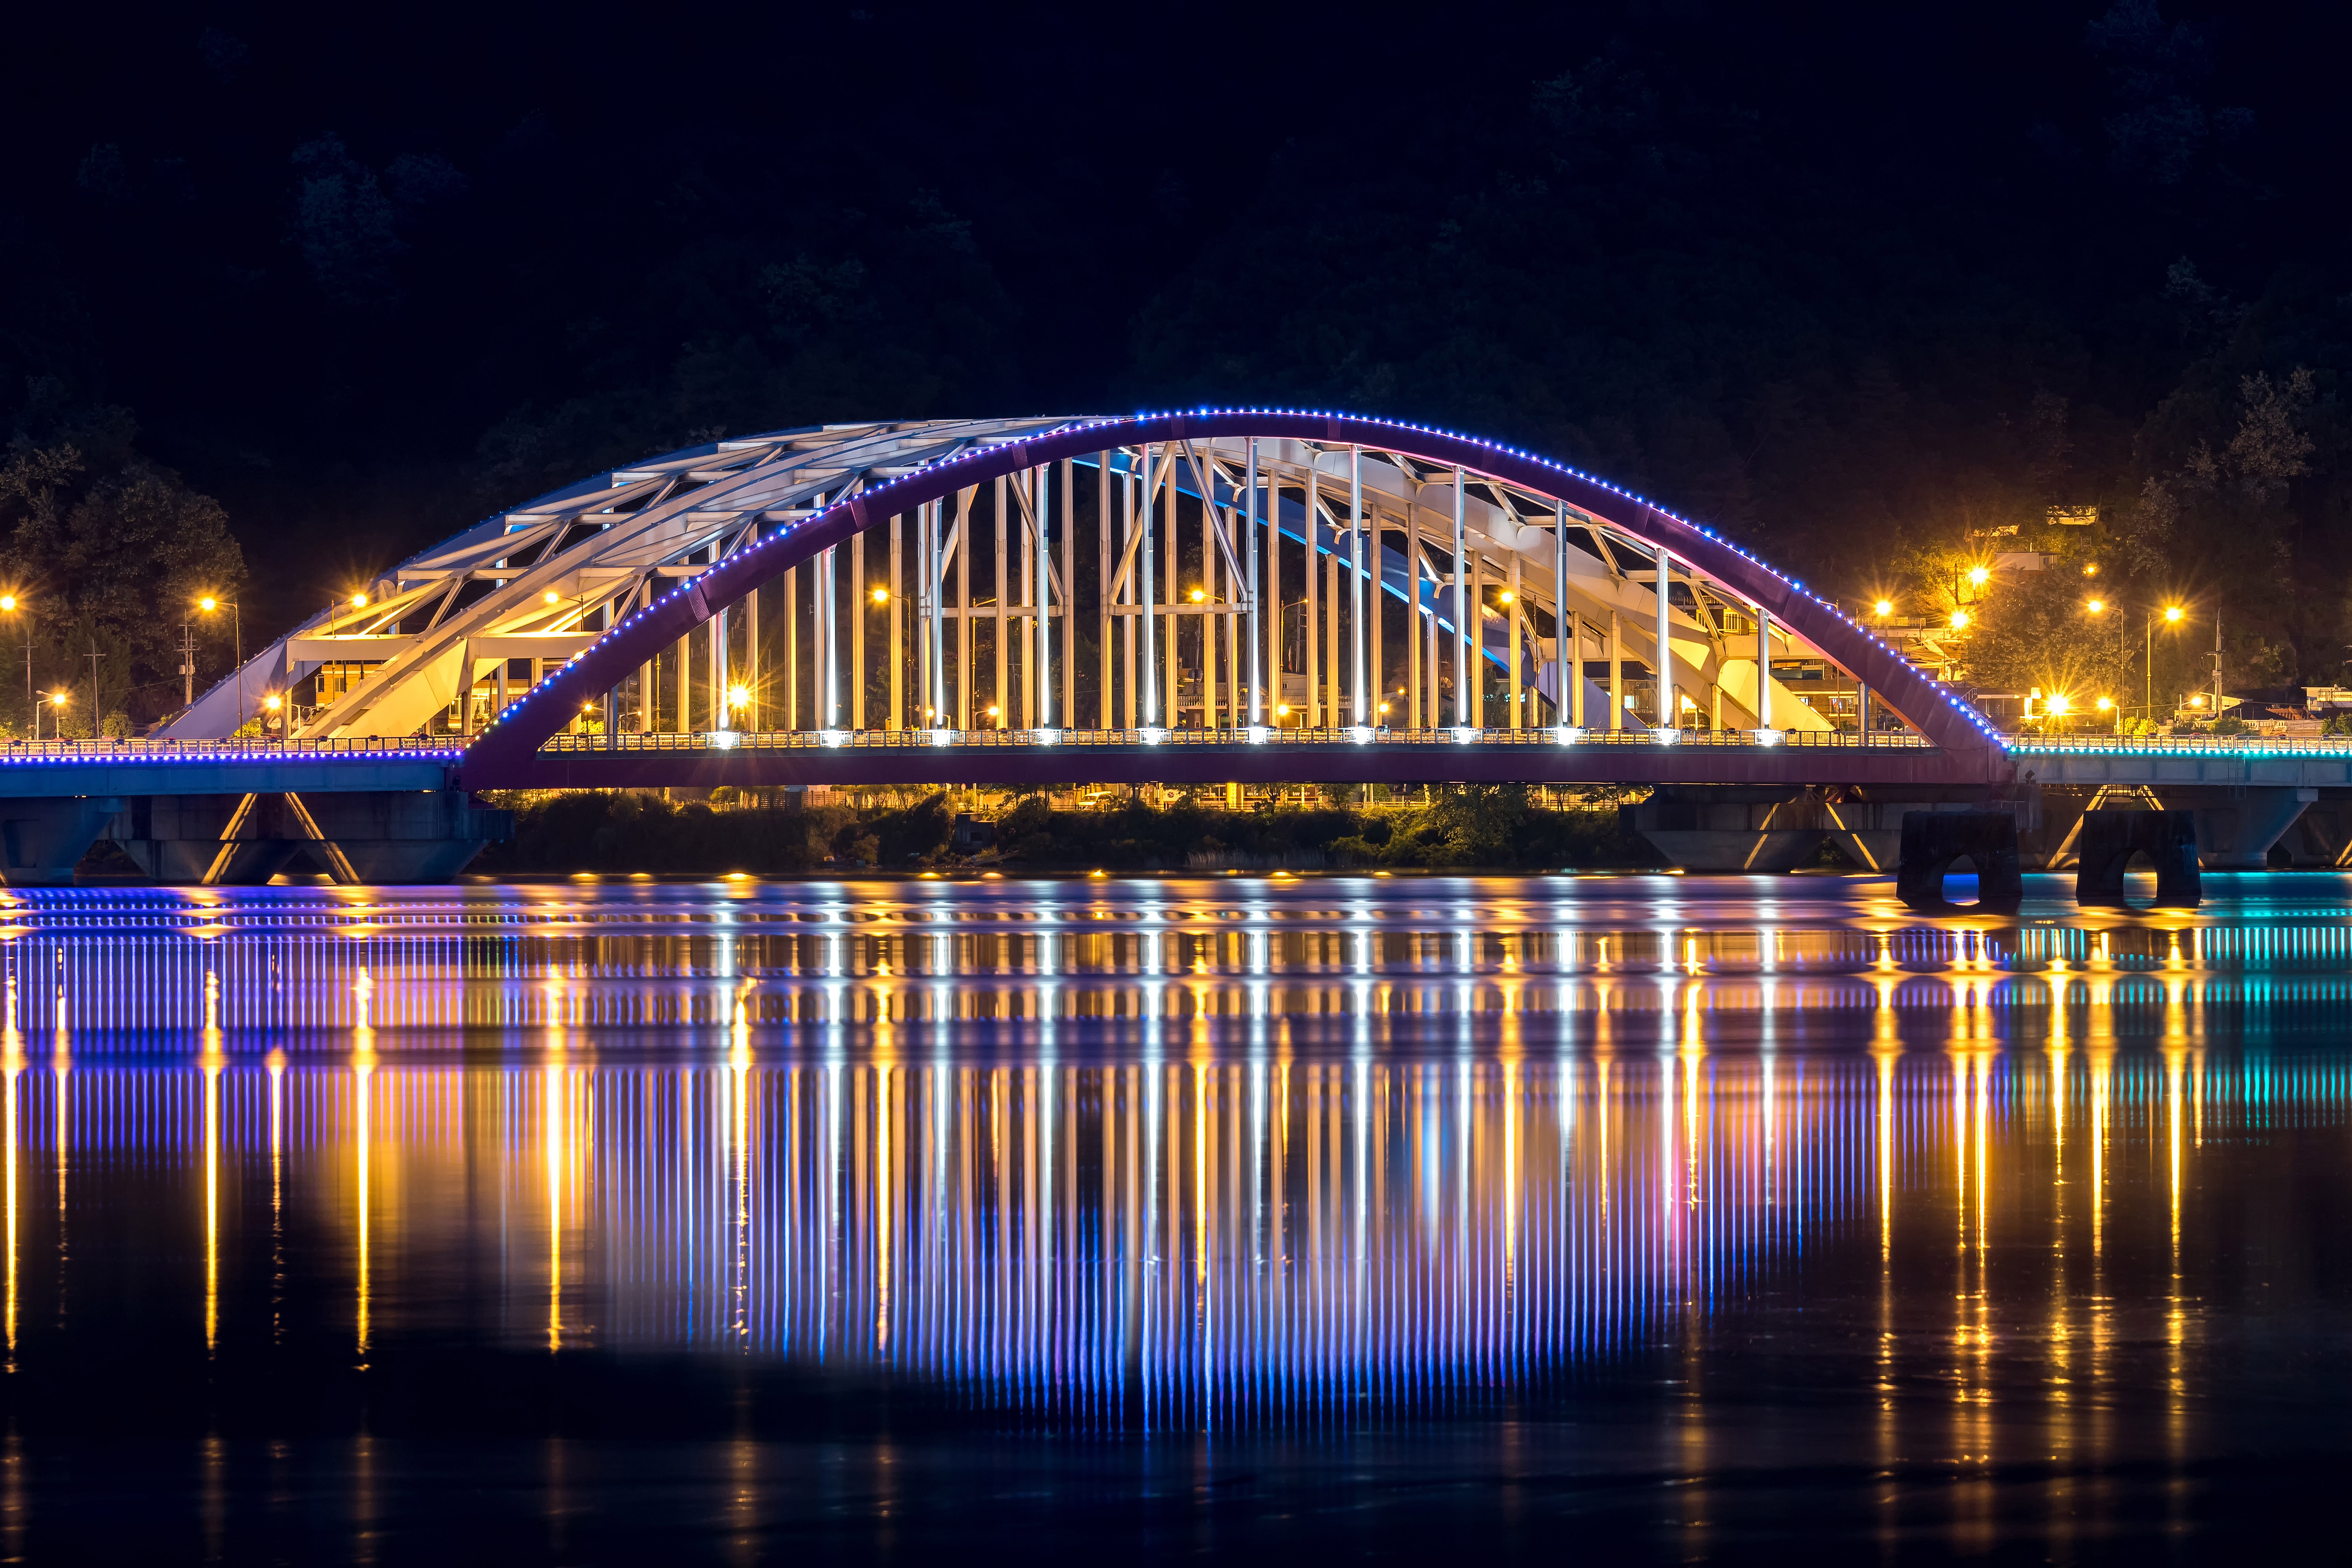 South Korea Night Bridge Seoul Neon Lights Cityscape Reflection 6000x4000